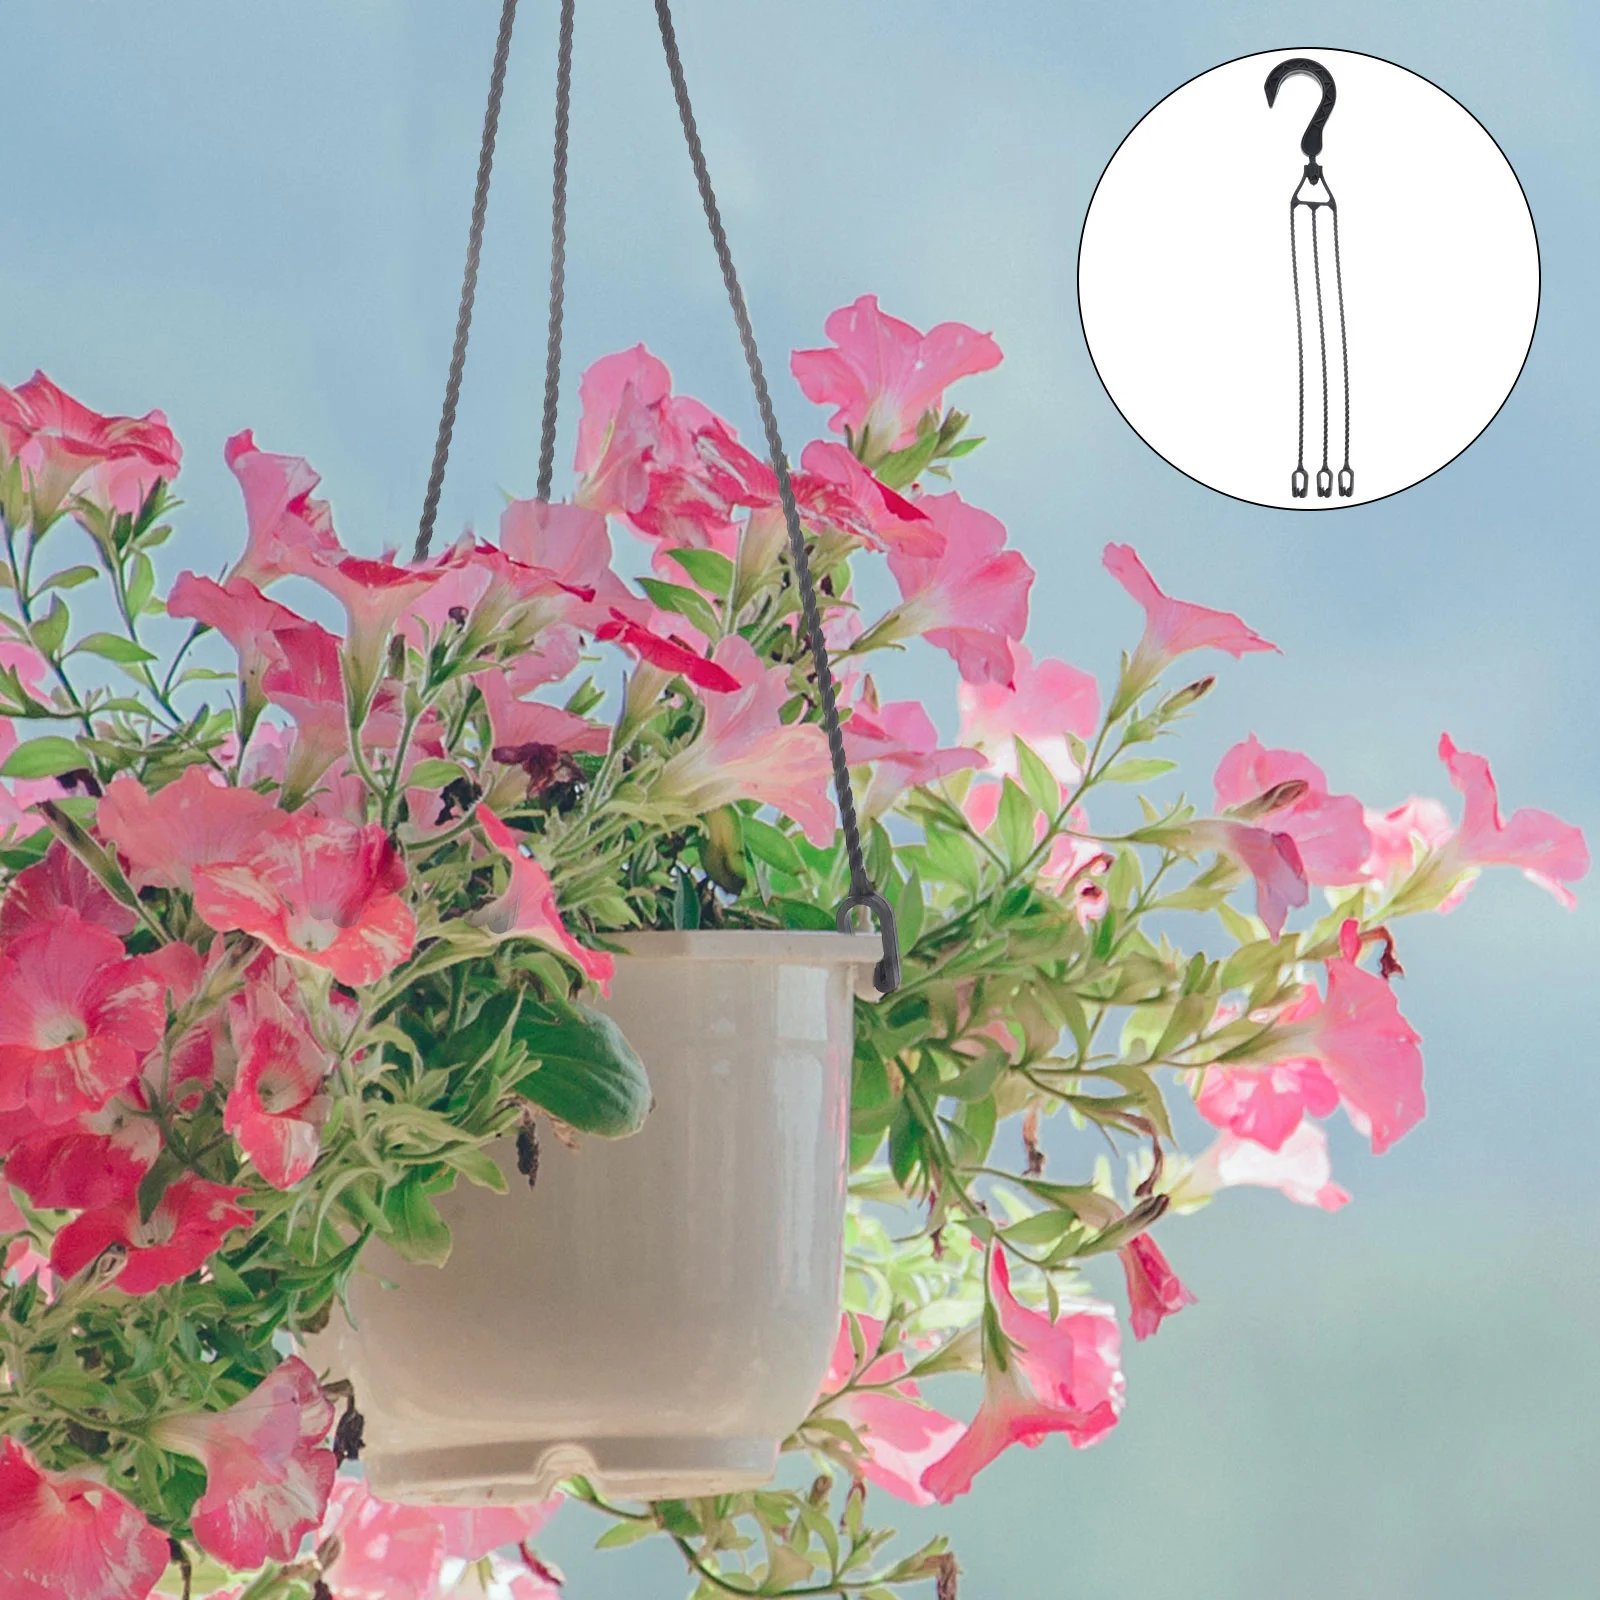 

5 Pcs Hanging Basin Hook Flower Pot Chain Hooks For Garden Planter Plastic Flowerpot Pots The